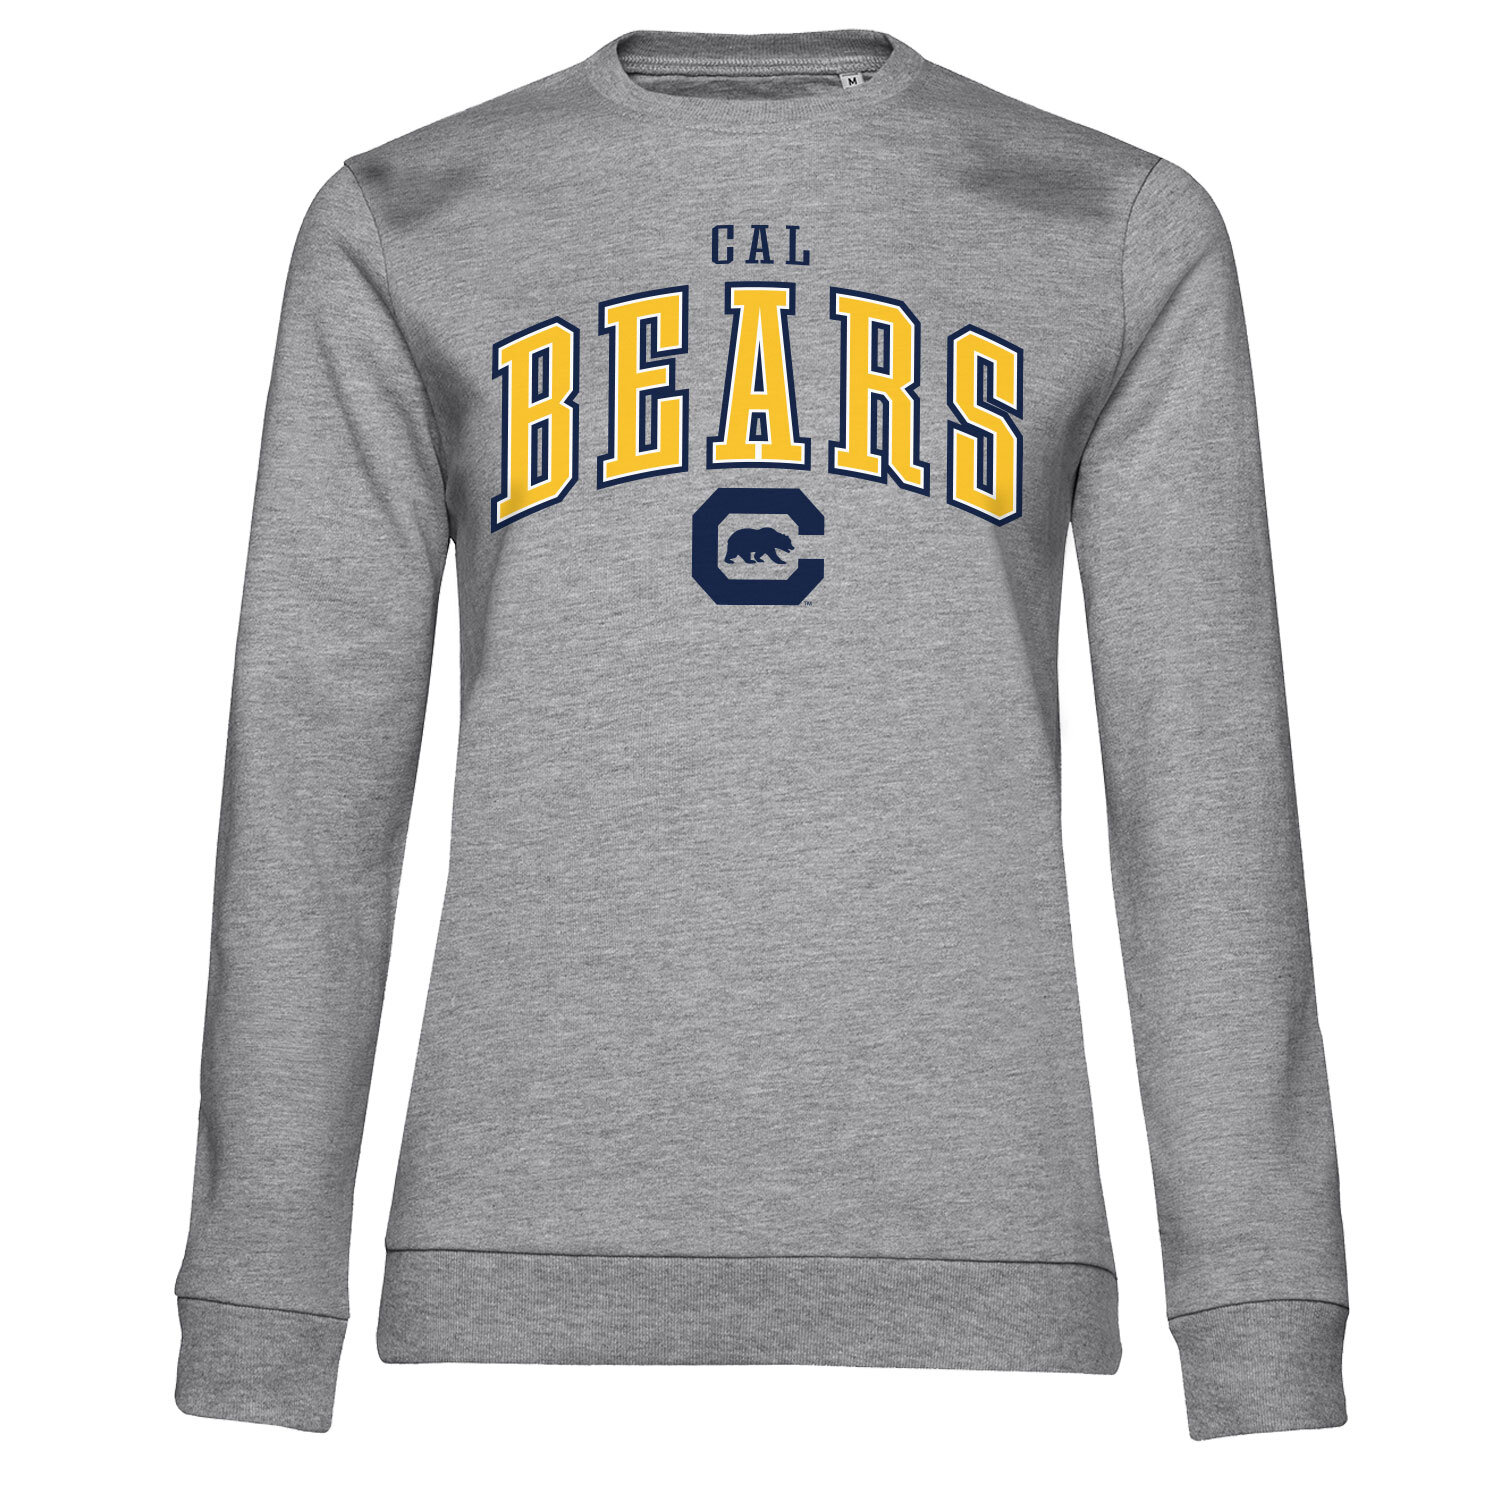 CAL Bears Big Patch Girly Sweatshirt